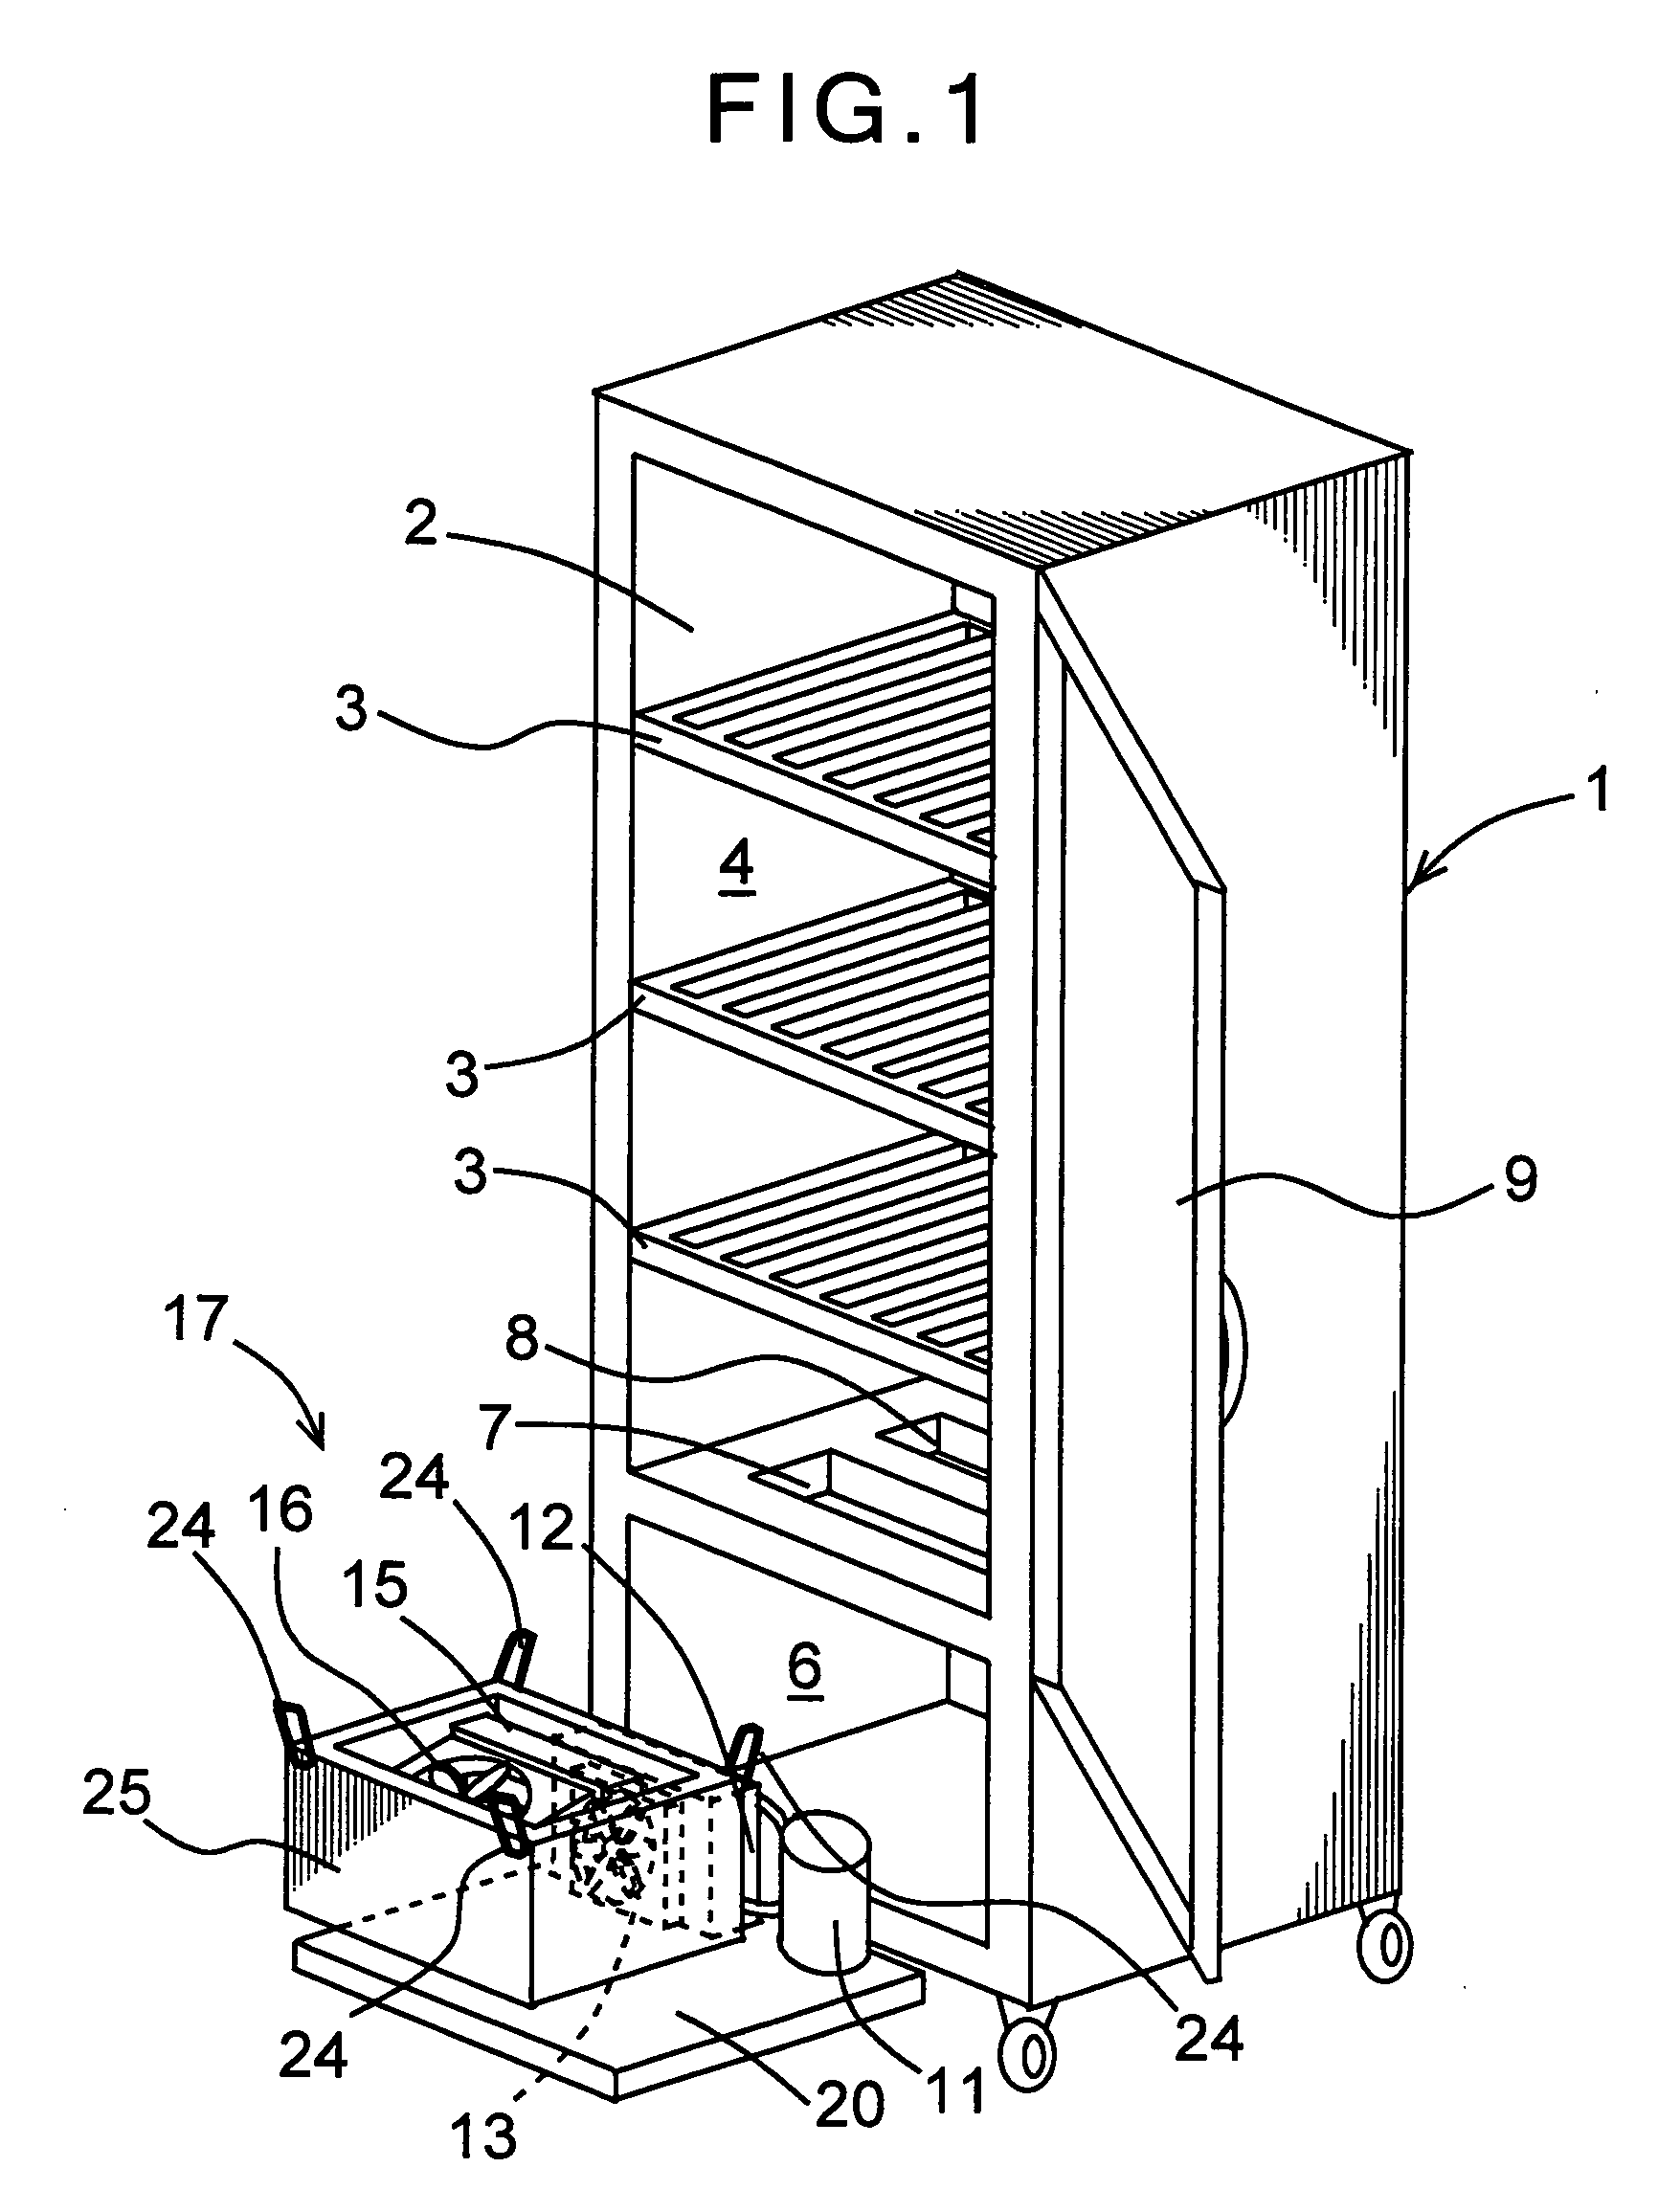 Modular refrigerator installed by hooks